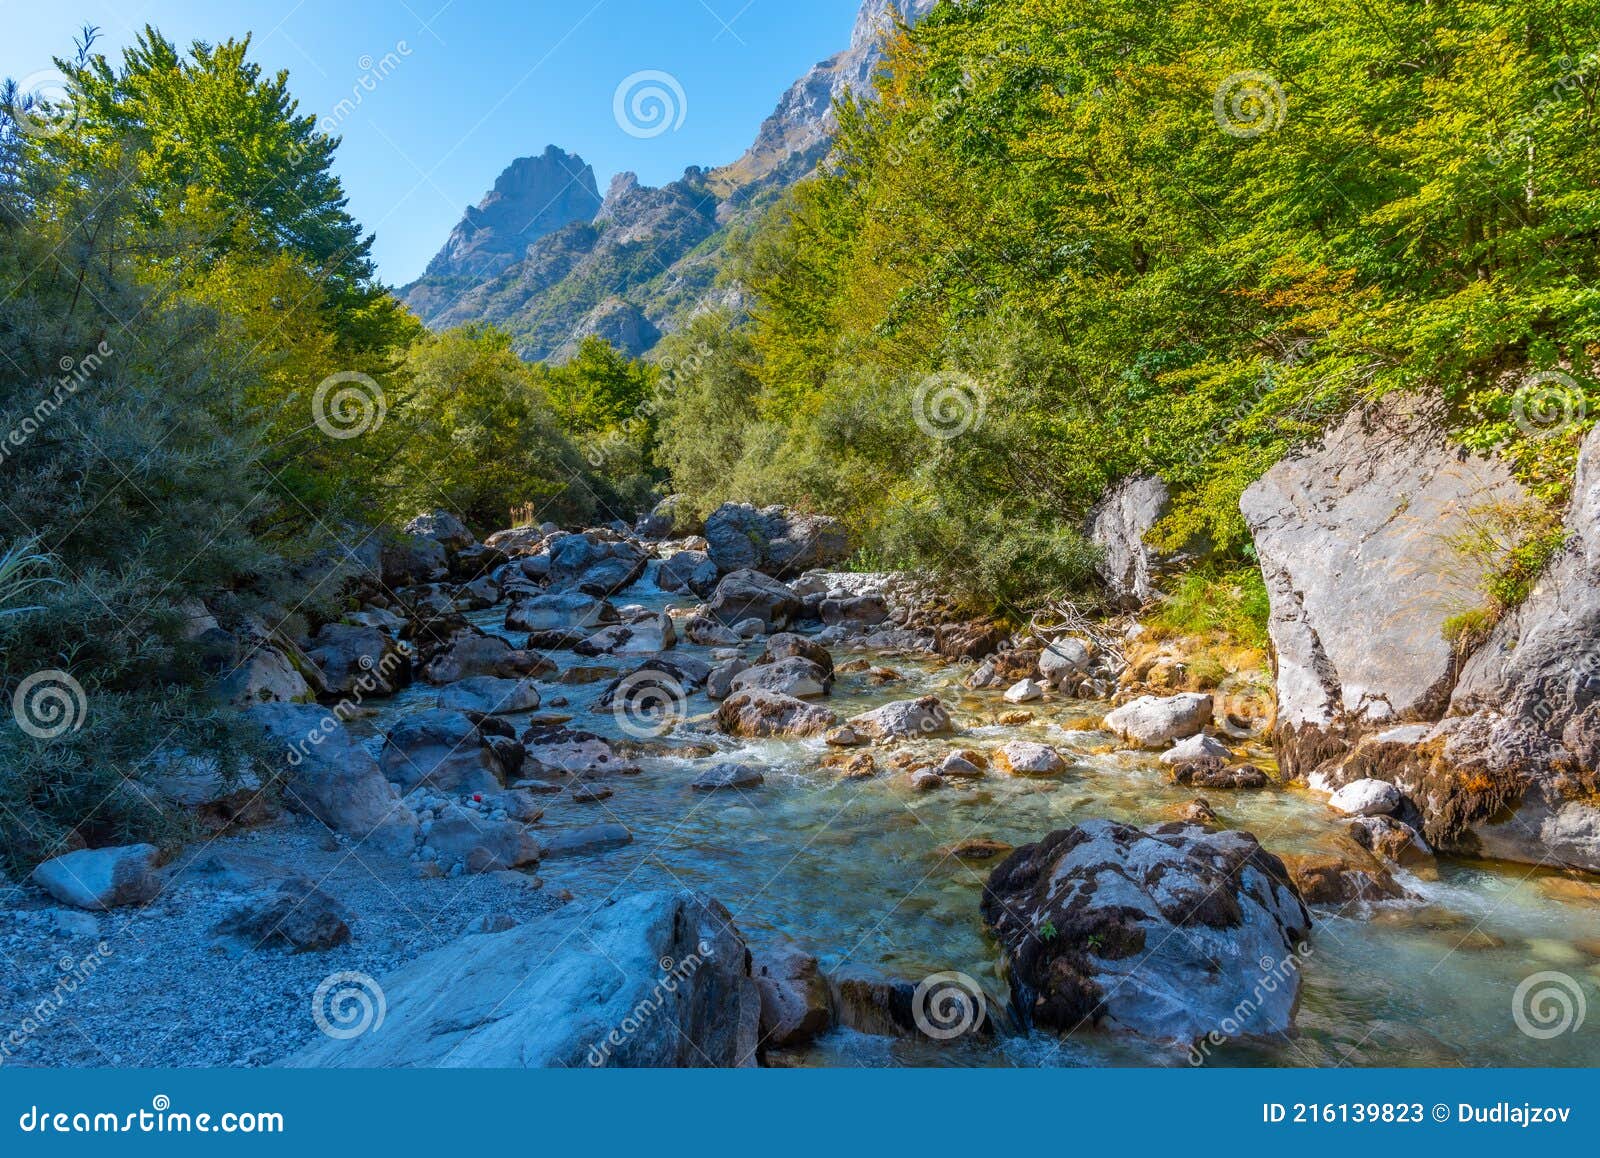 Landsdækkende Ung Hammer Valbona River Surrounded by Splendid Nature in Albania Stock Image - Image  of hill, tourism: 216139823